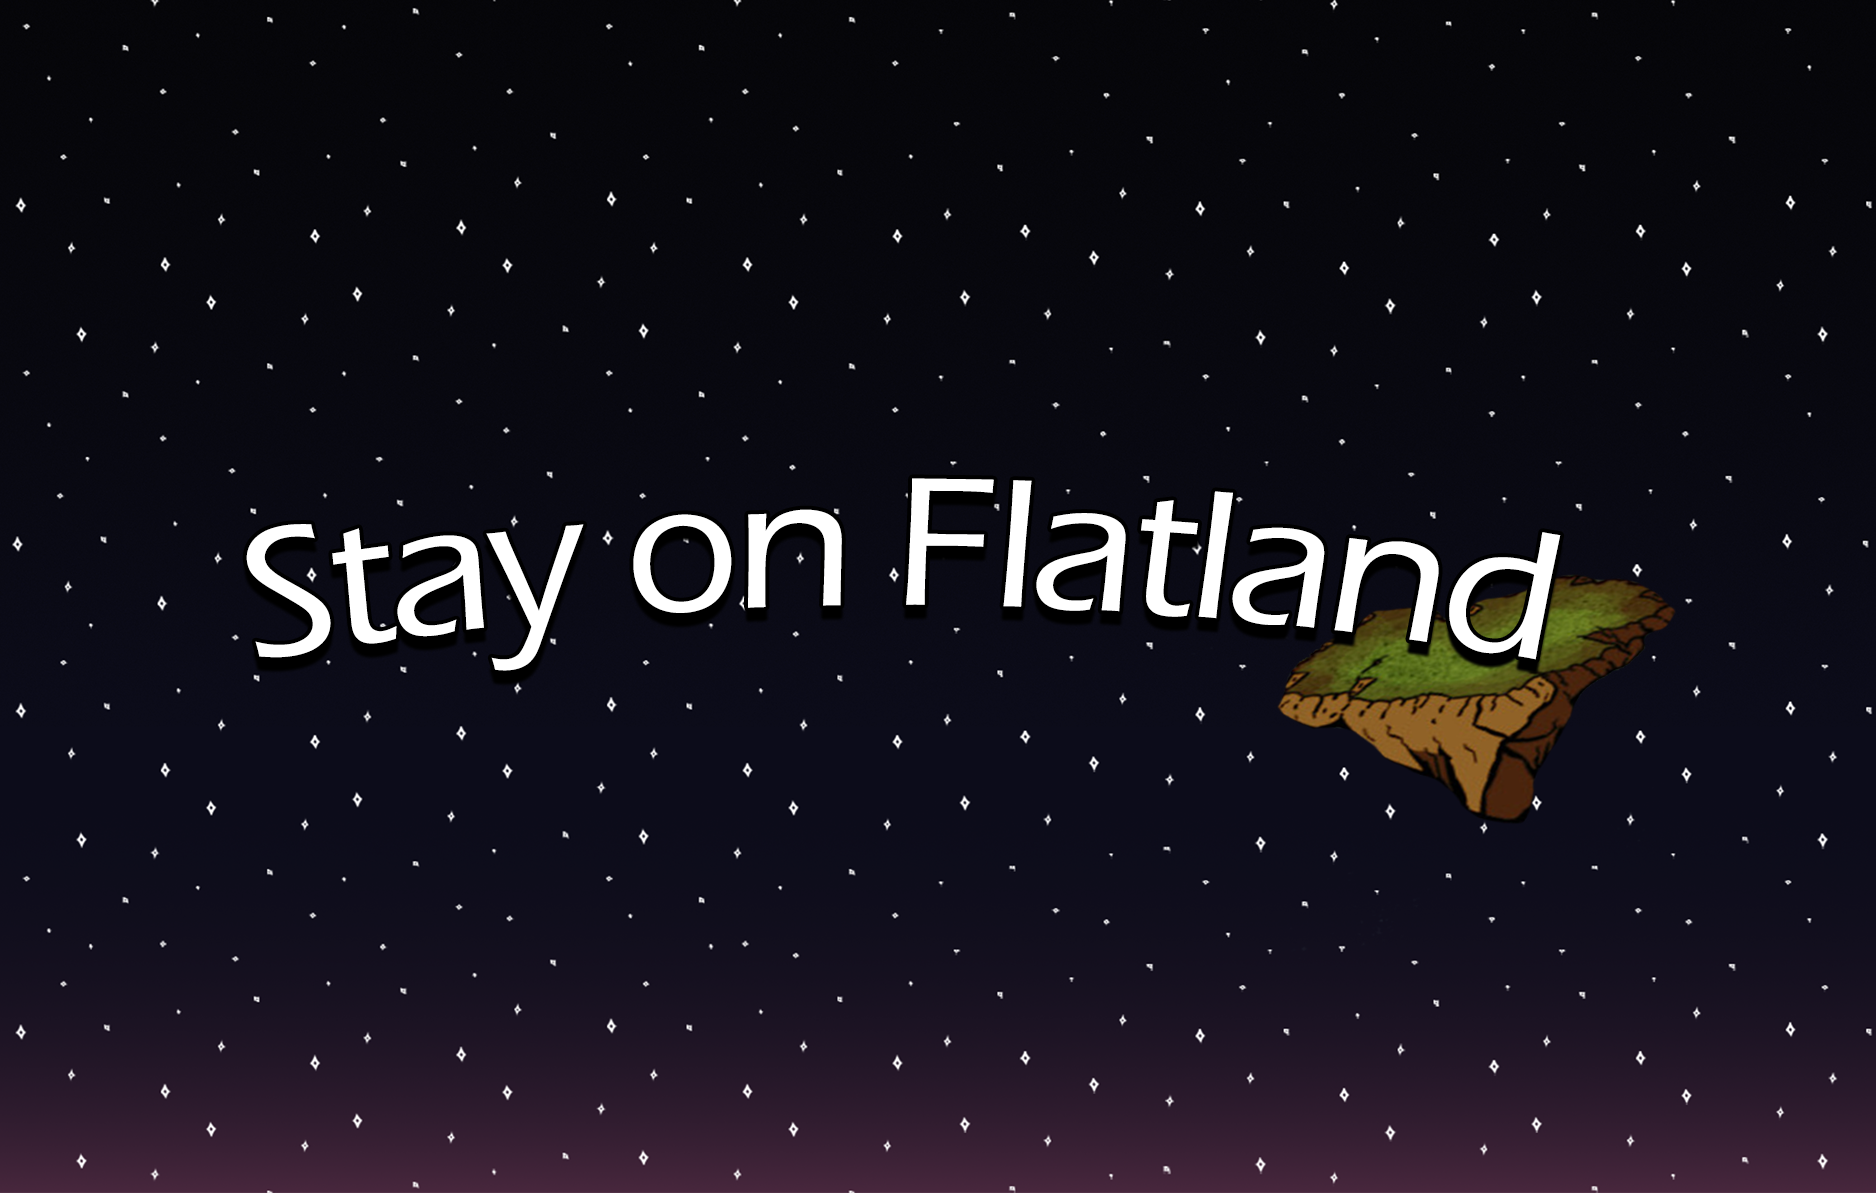 Stay on Flatland